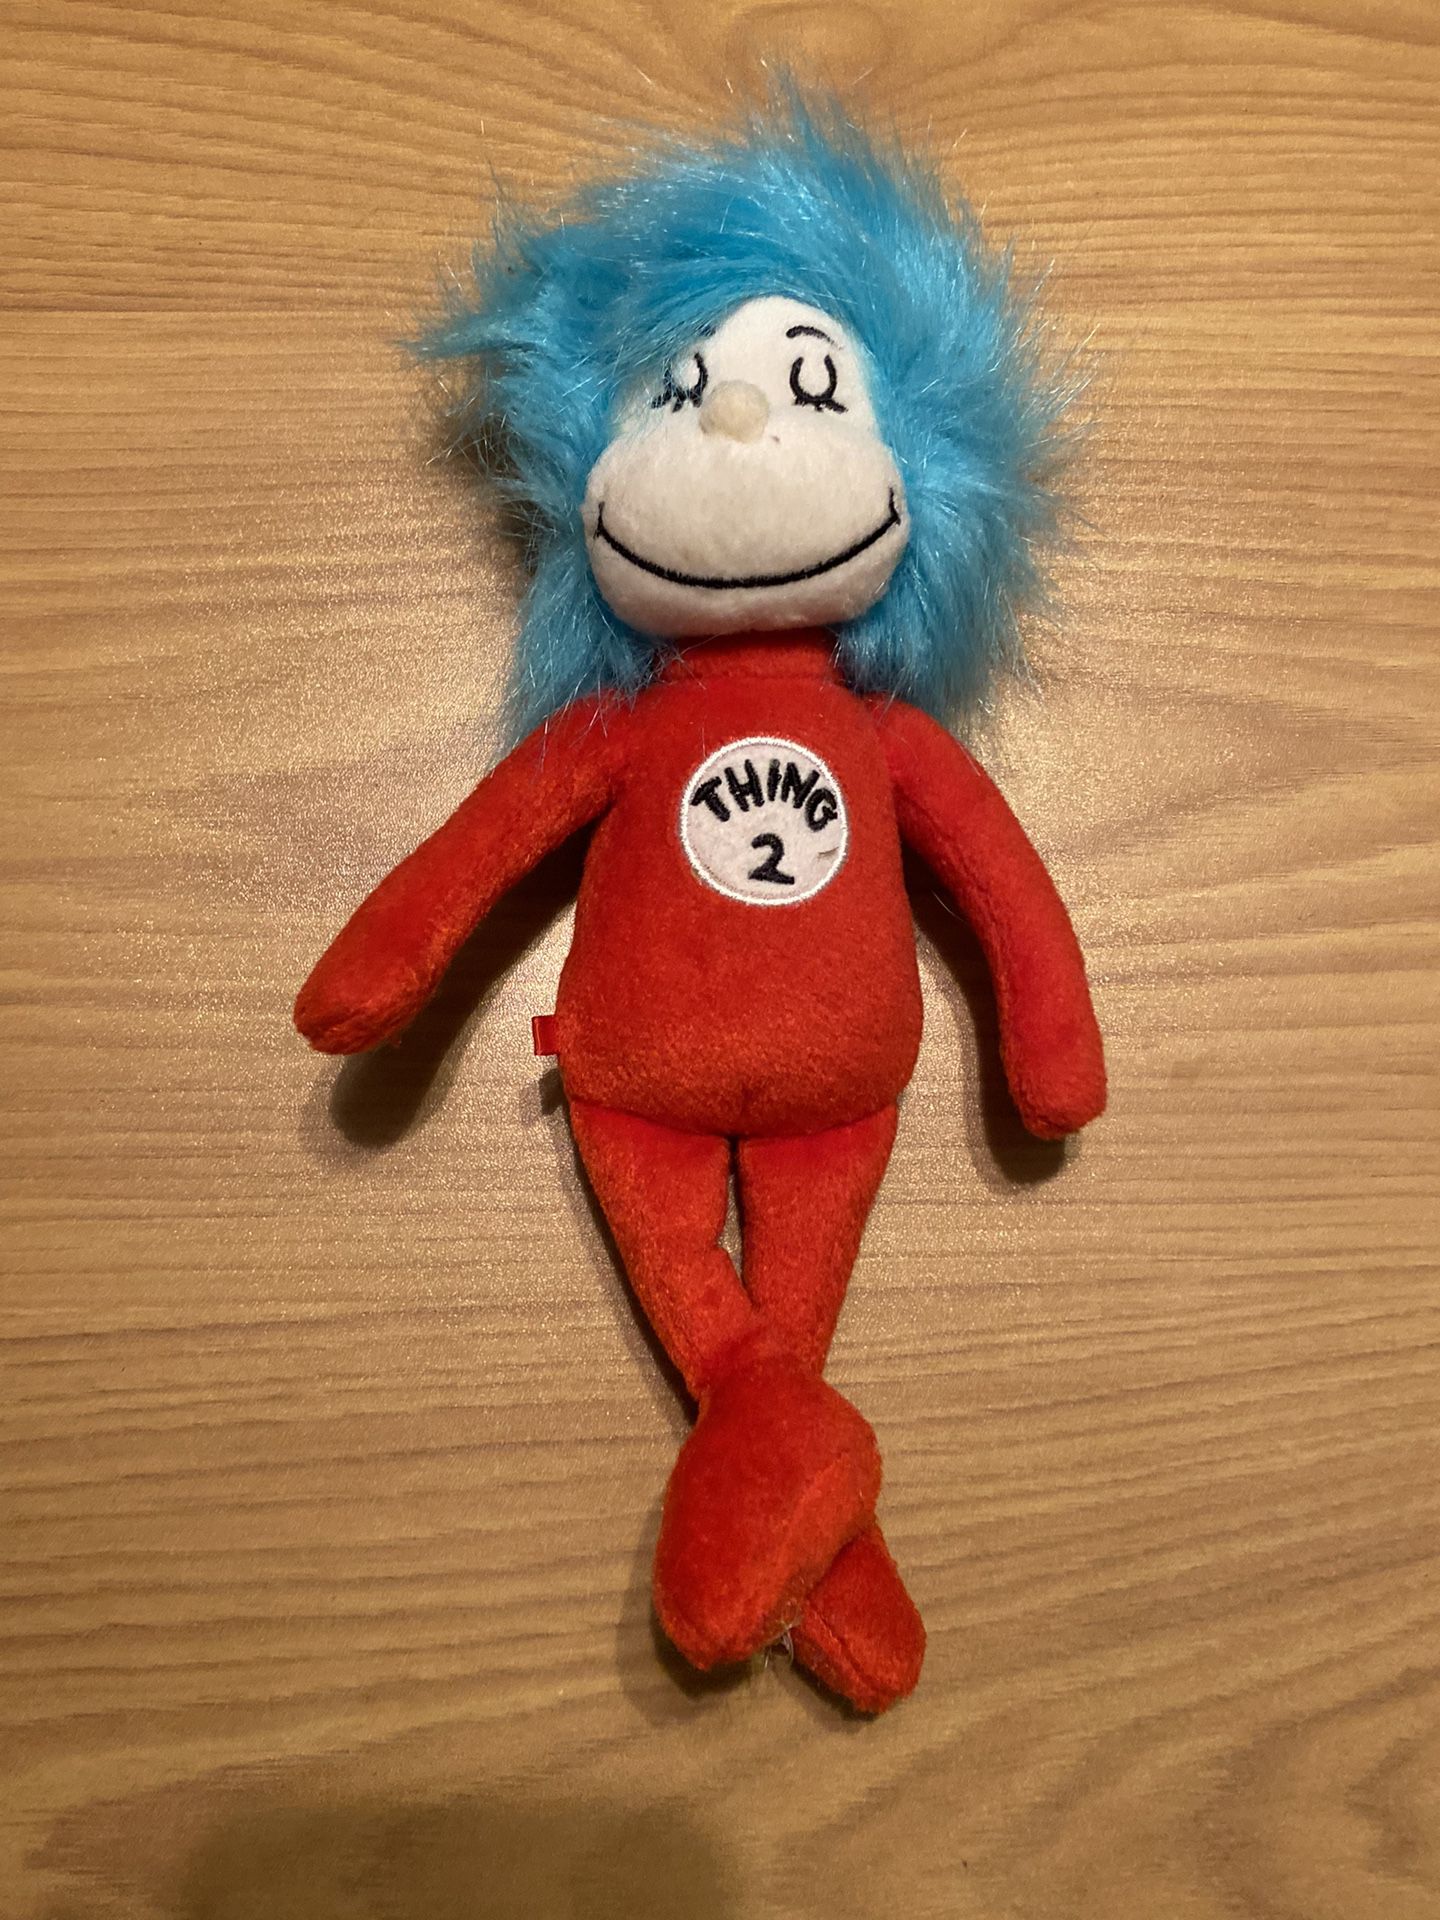 Dr. Seuss thing 2 two Manhattan toy plush stuffed animal red blue hair